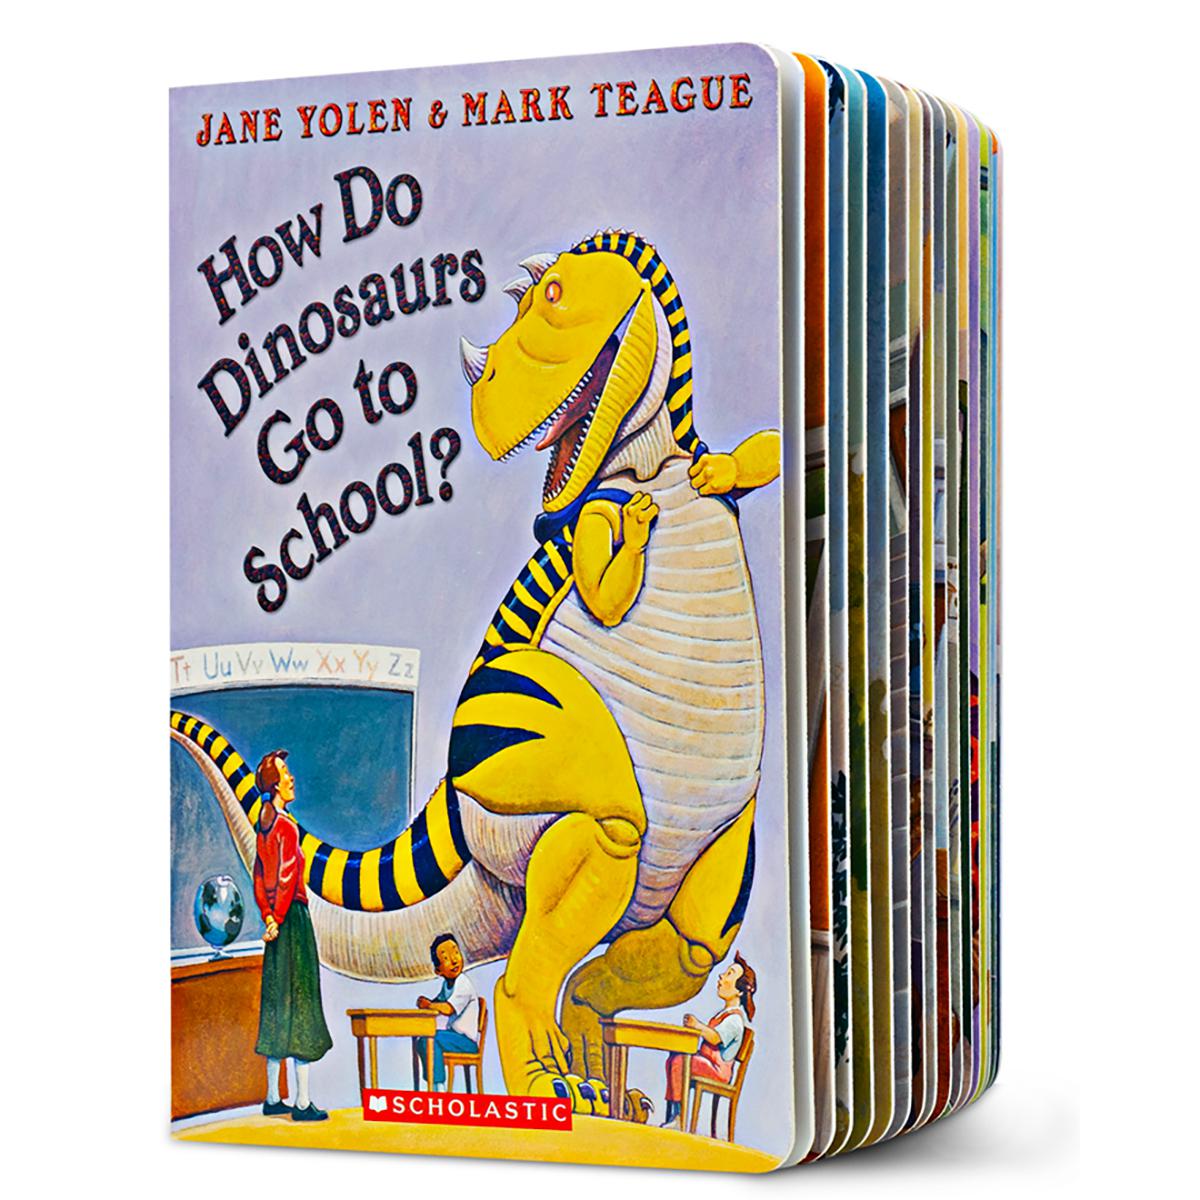  How do Dinosaurs go to school? 